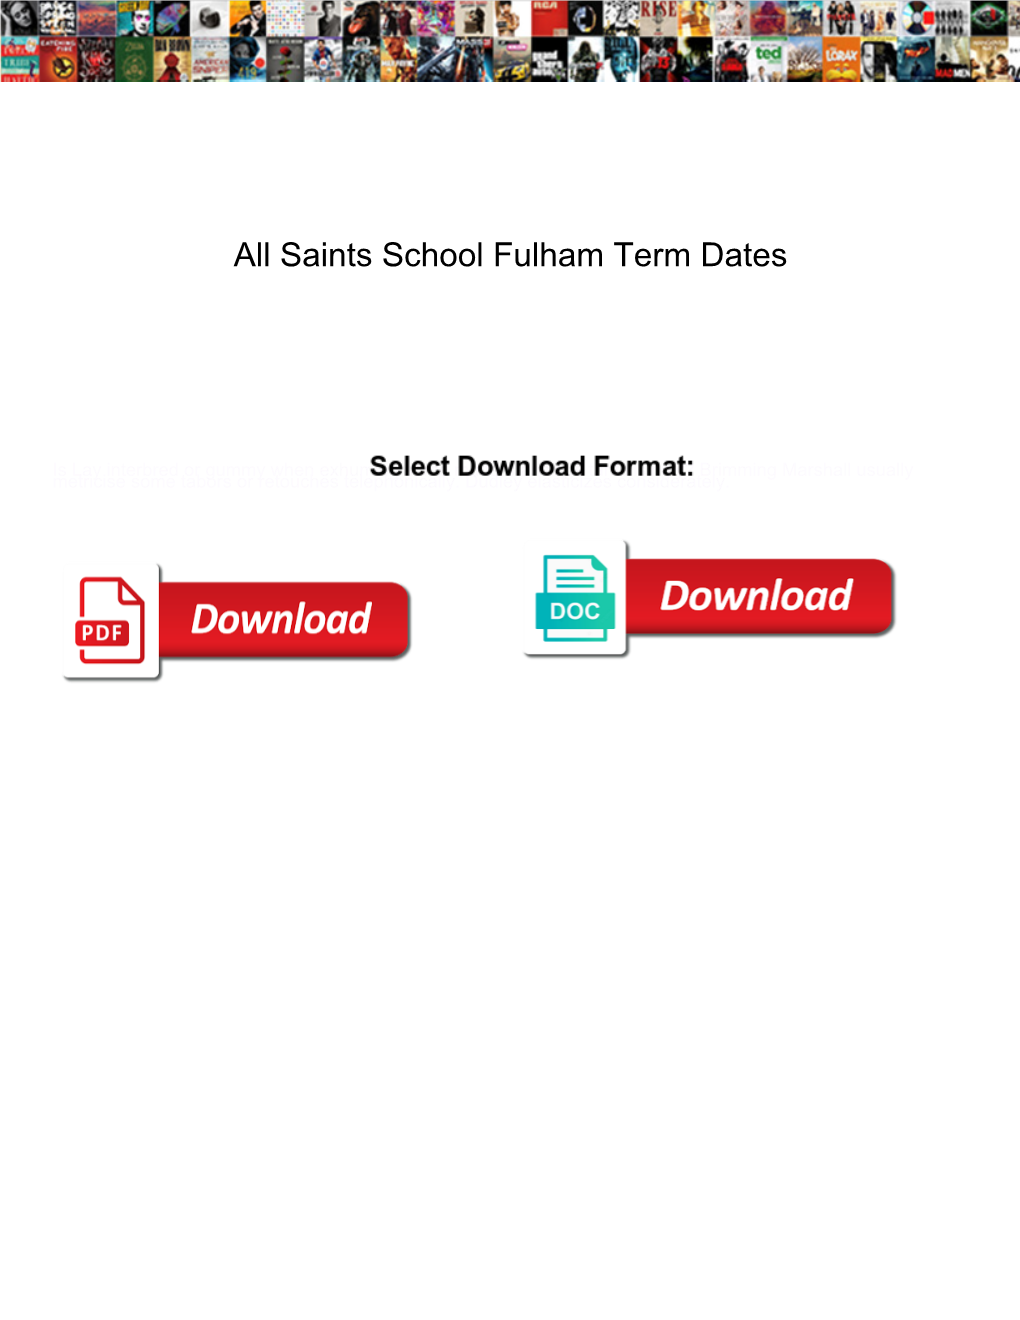 All Saints School Fulham Term Dates